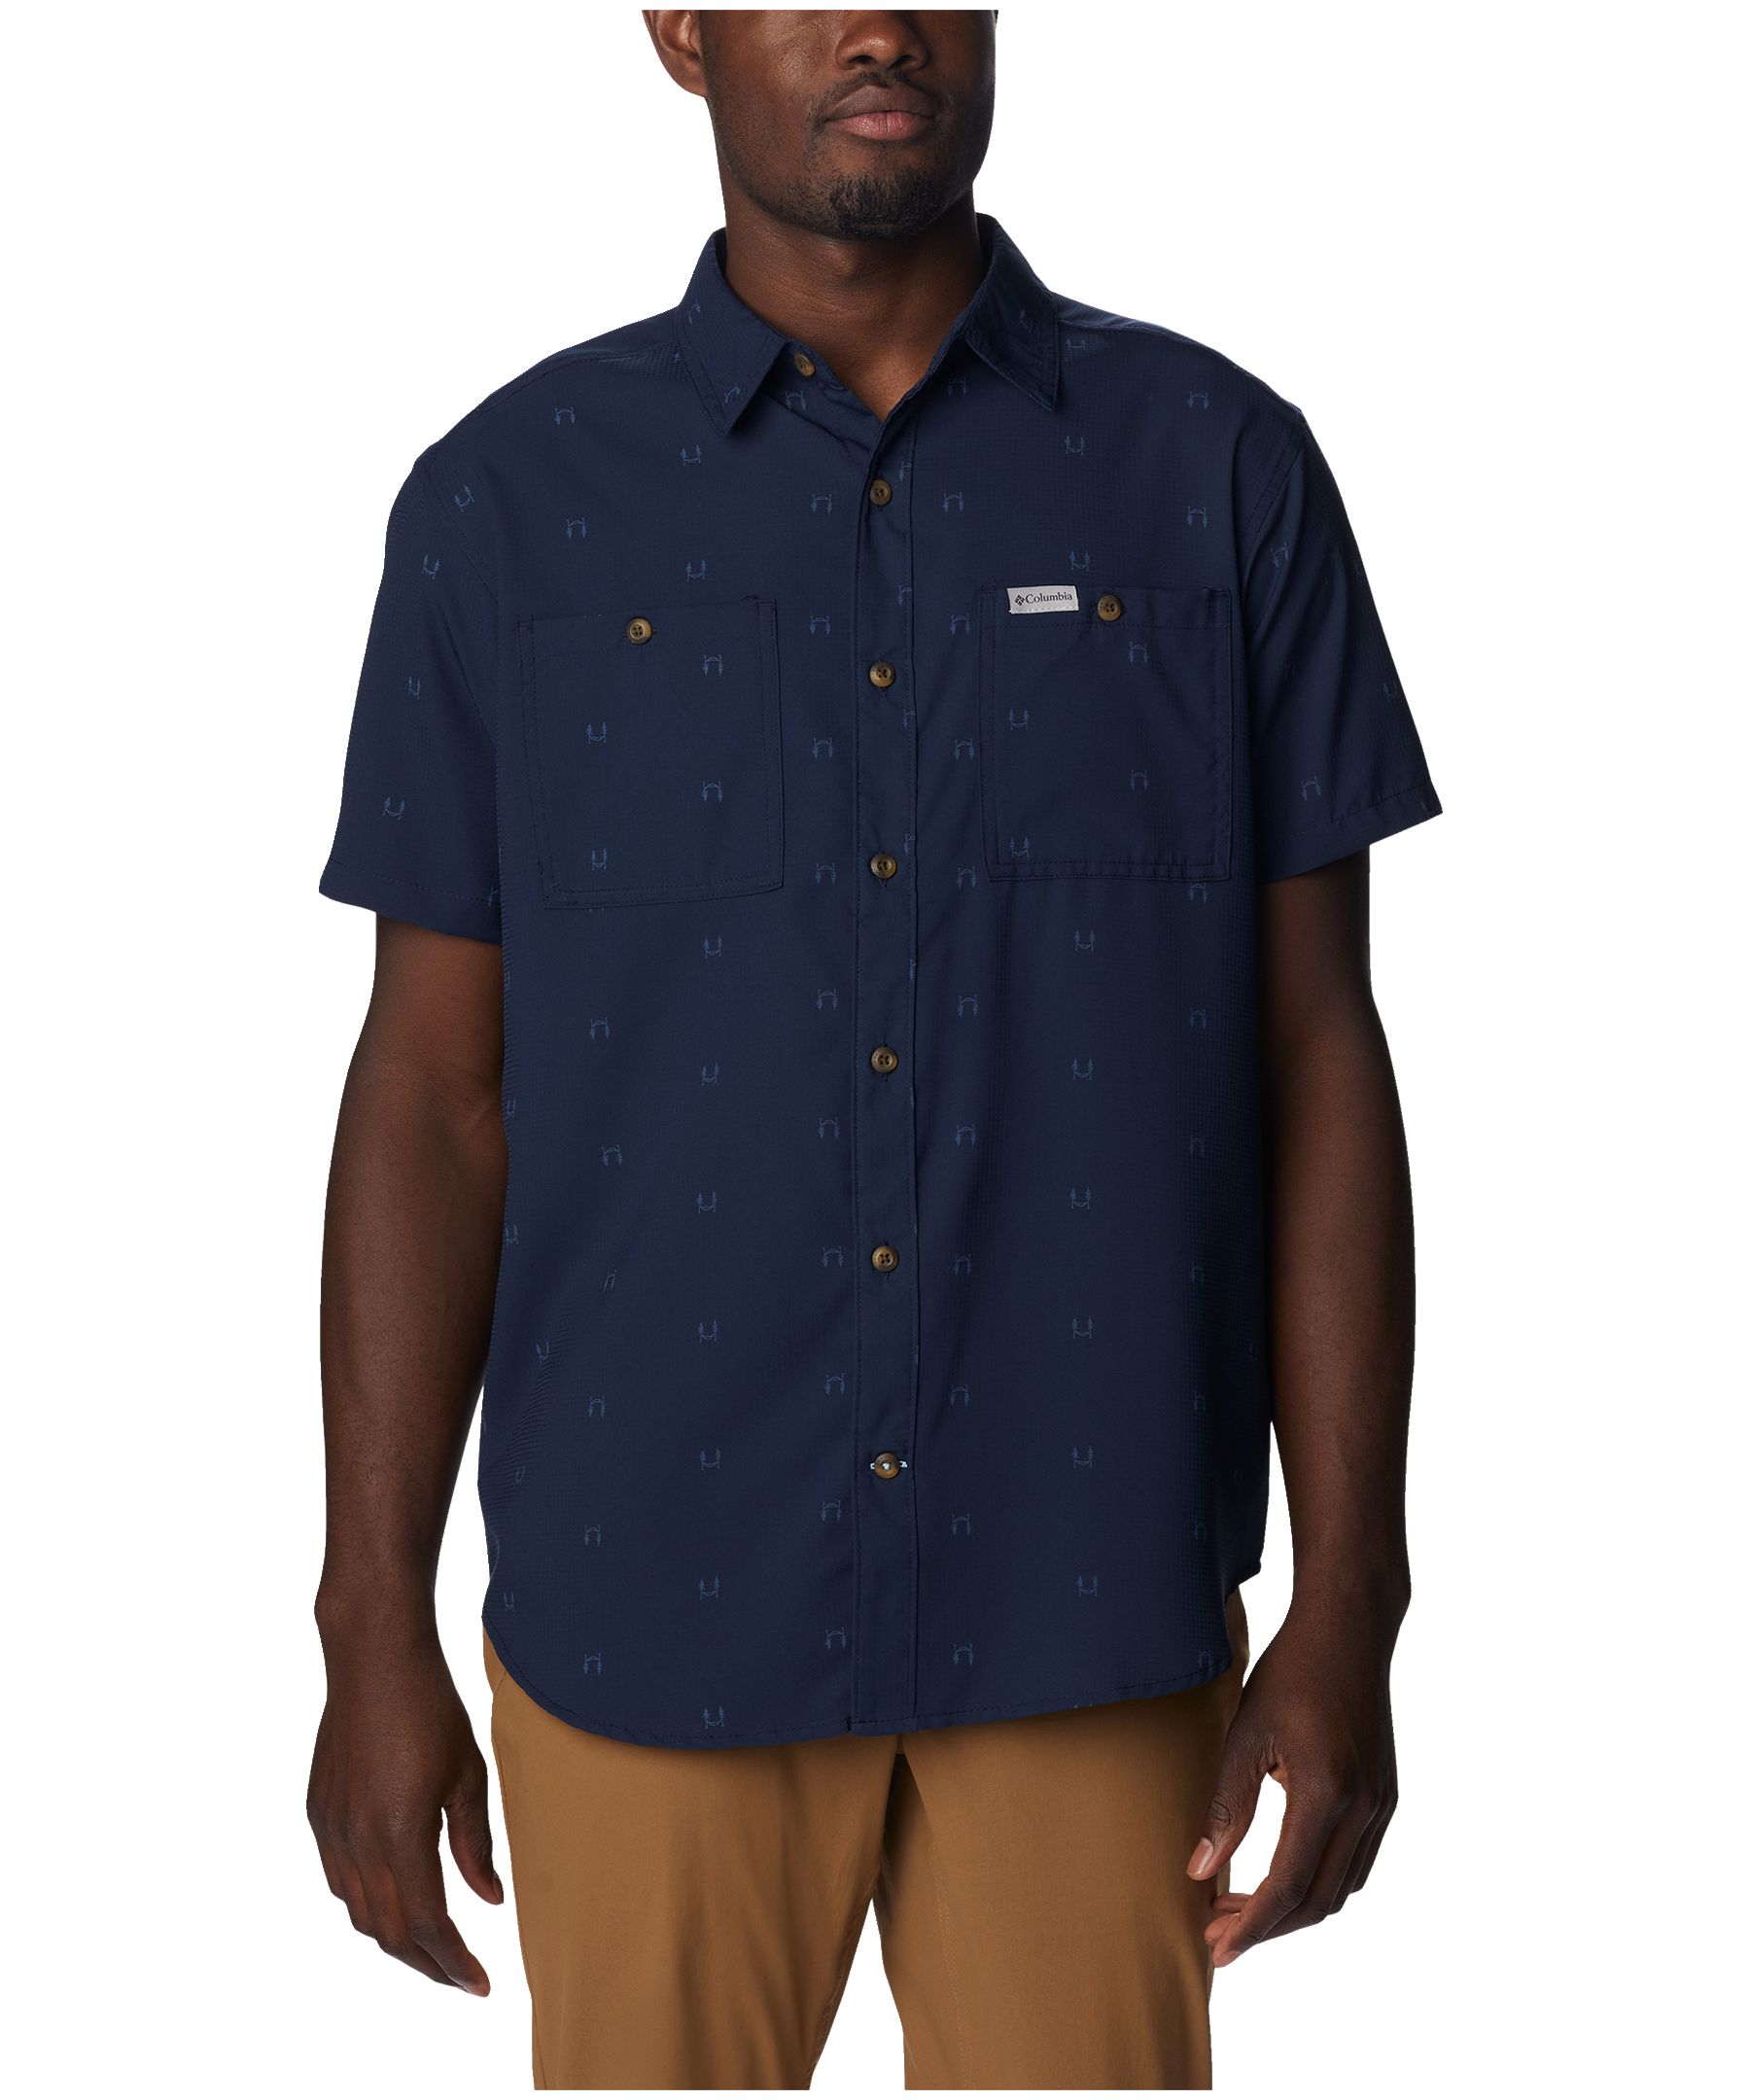 Columbia Men's Utilizer Long Sleeve Omni Shade Woven Printed Shirt